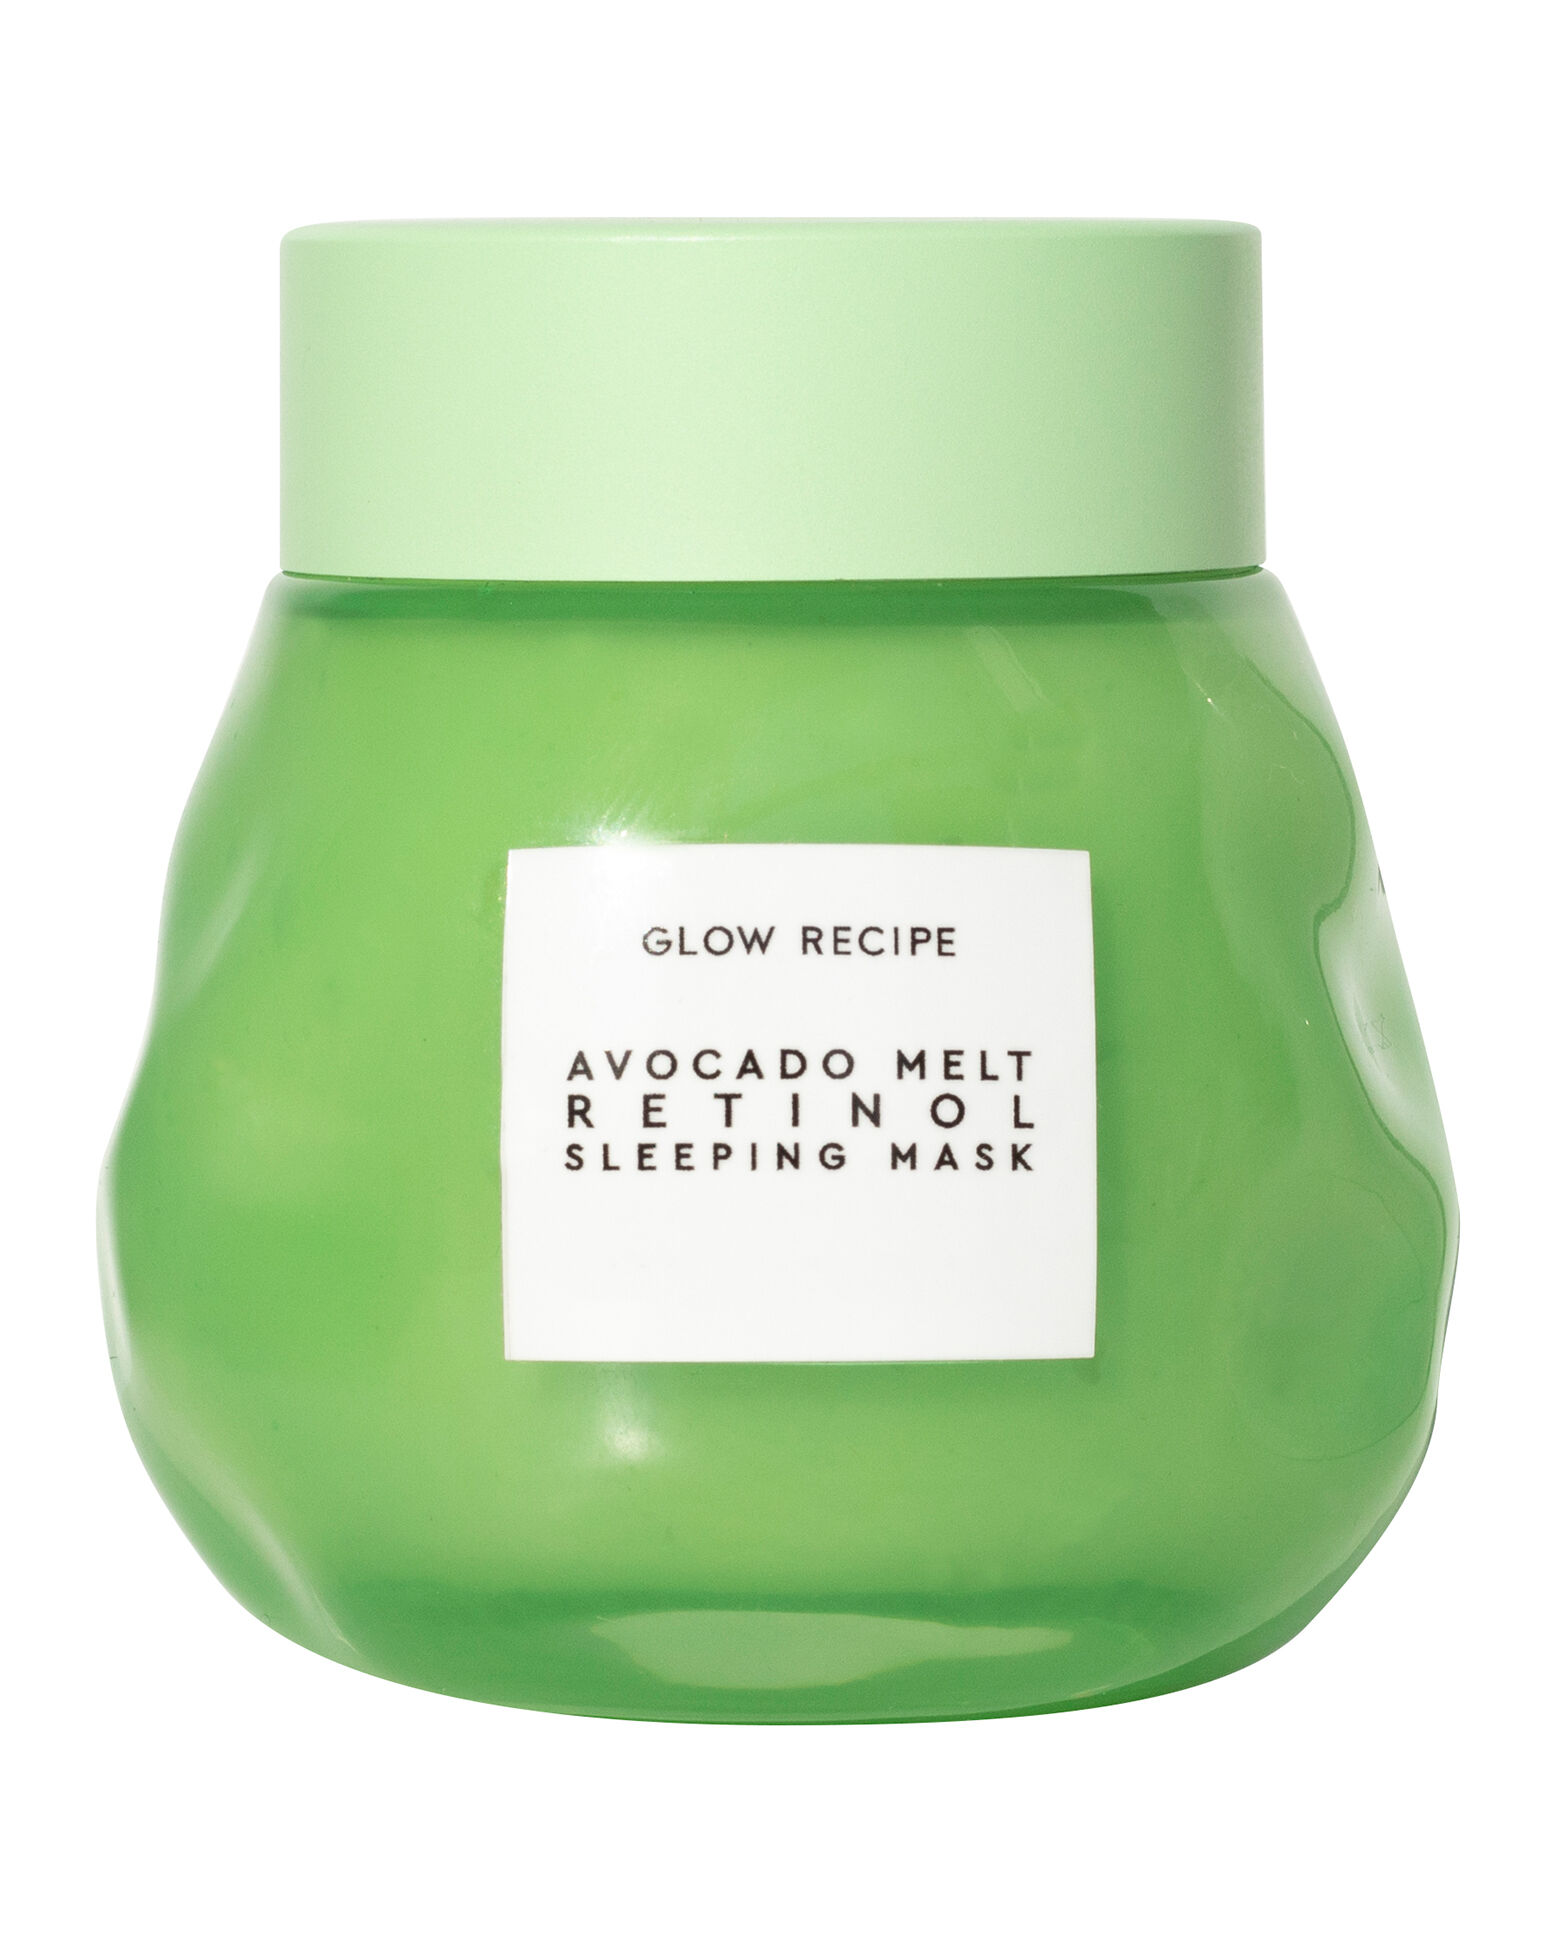 Glow Recipe - Avocado Retinol Sleeping Mask